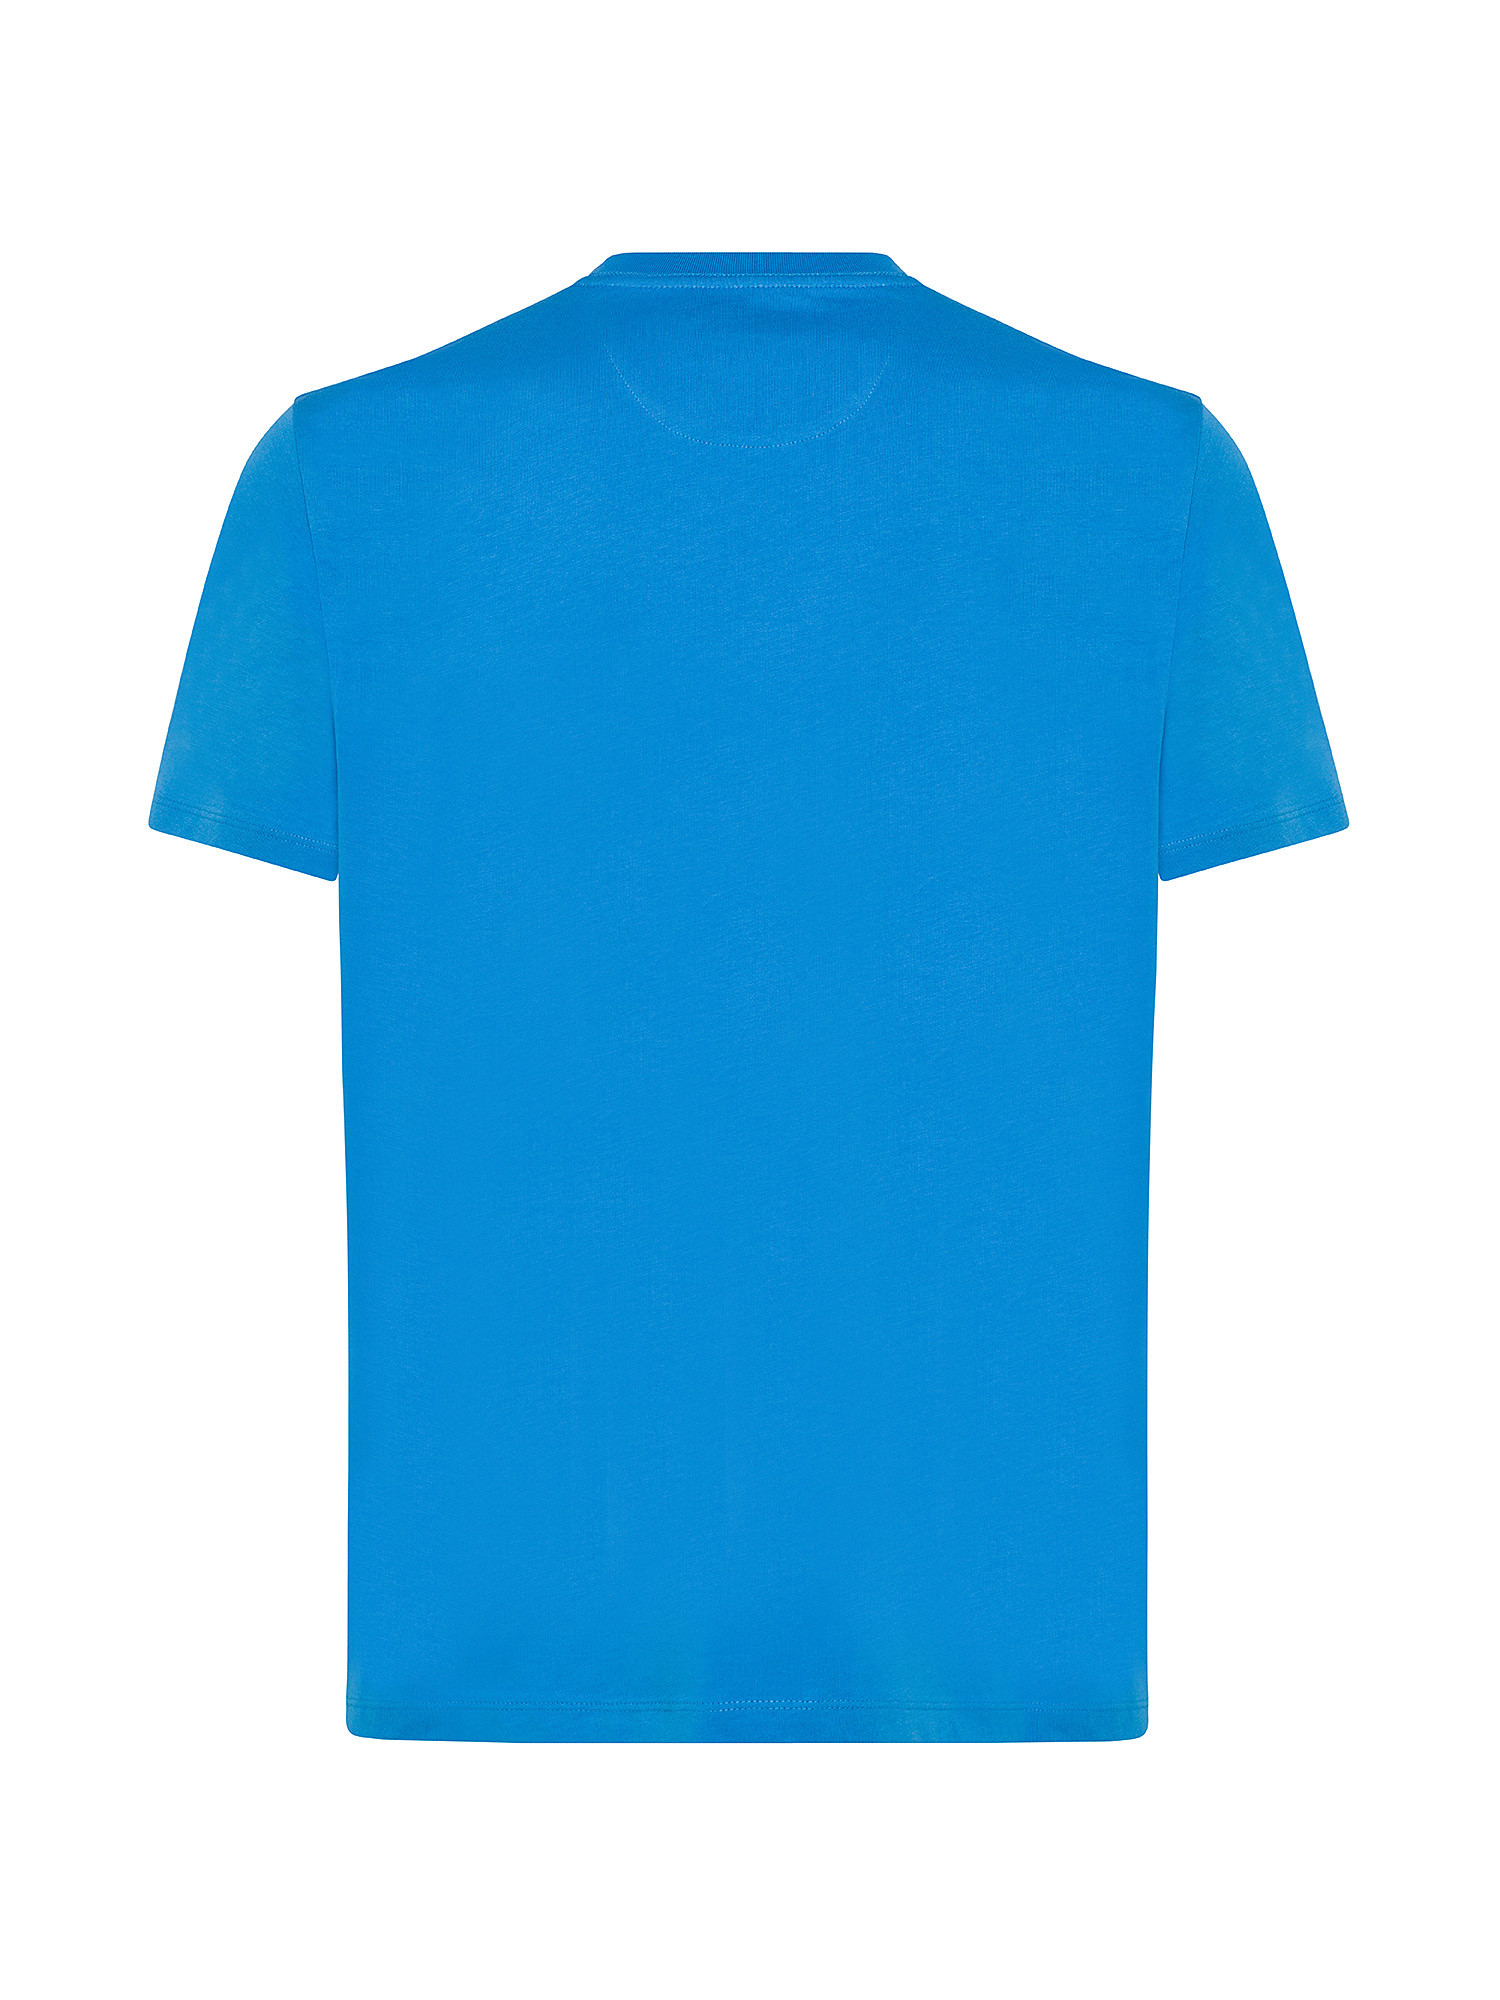 JCT - Pure supima cotton T-shirt, Light Blue, large image number 1